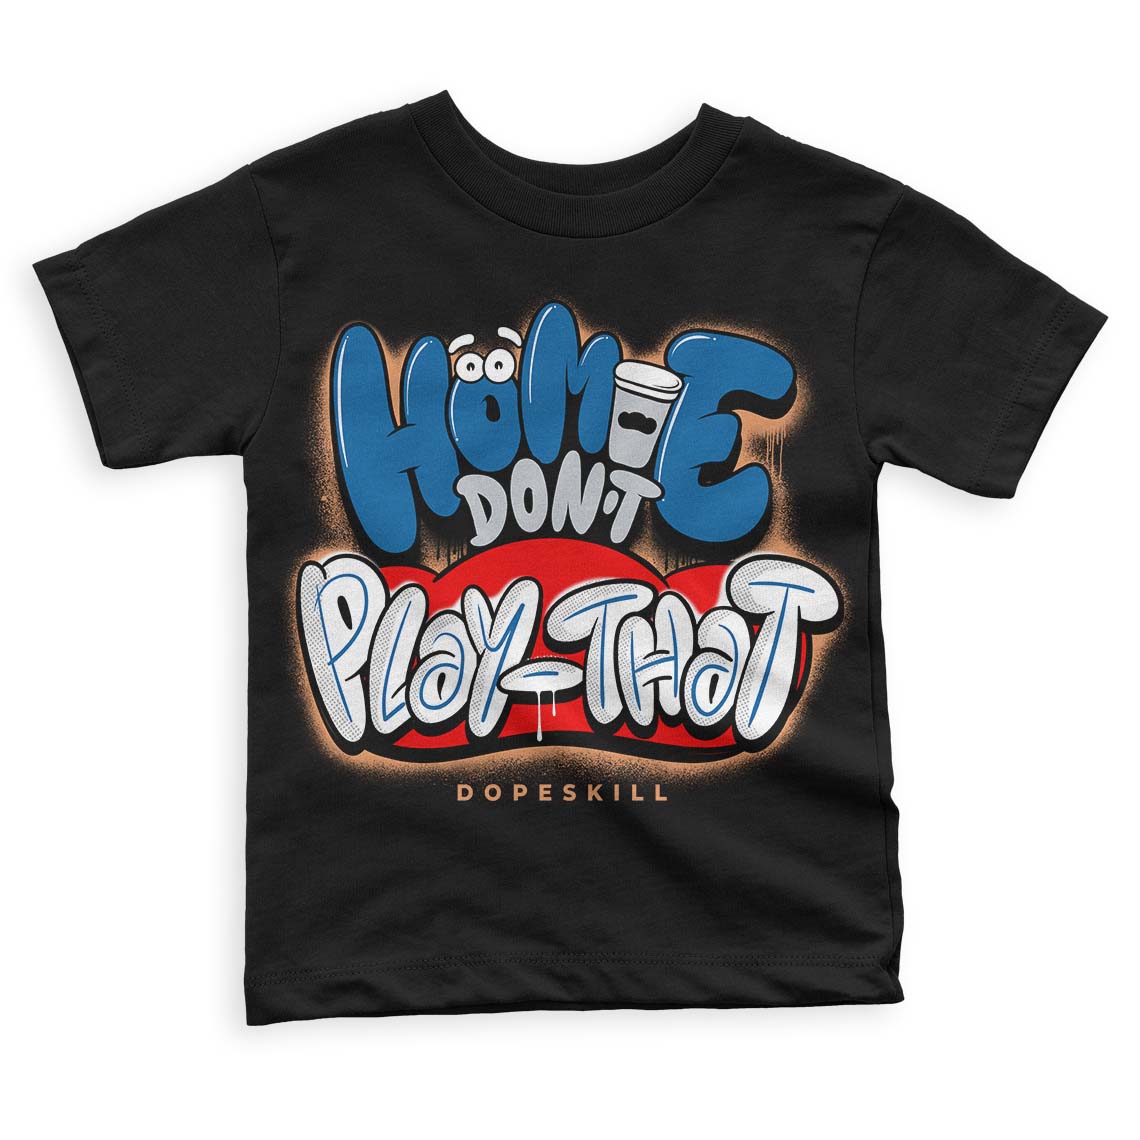 Jordan 3 Retro Wizards DopeSkill Toddler Kids T-shirt Homie Don't Play That Graphic Streetwear - Black